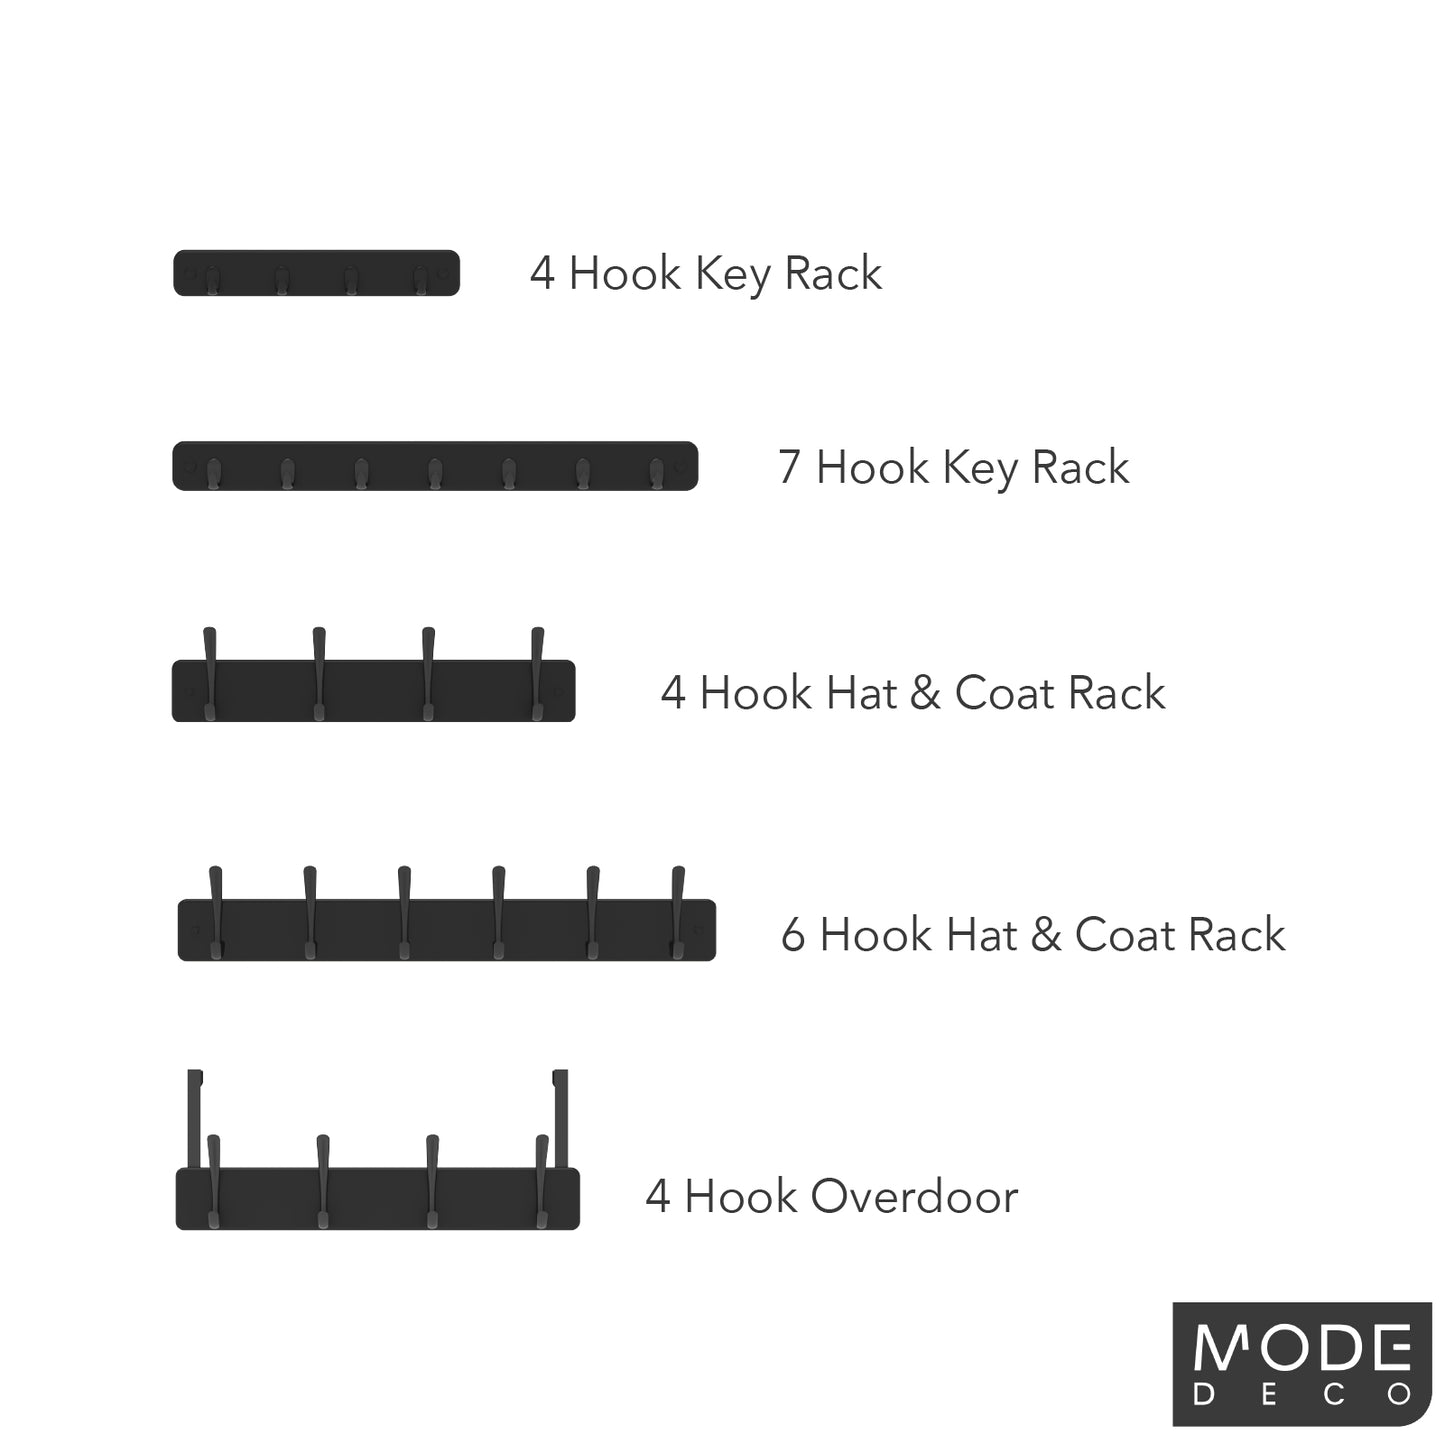 4 Black Hooks on Black Board Over Door Hook